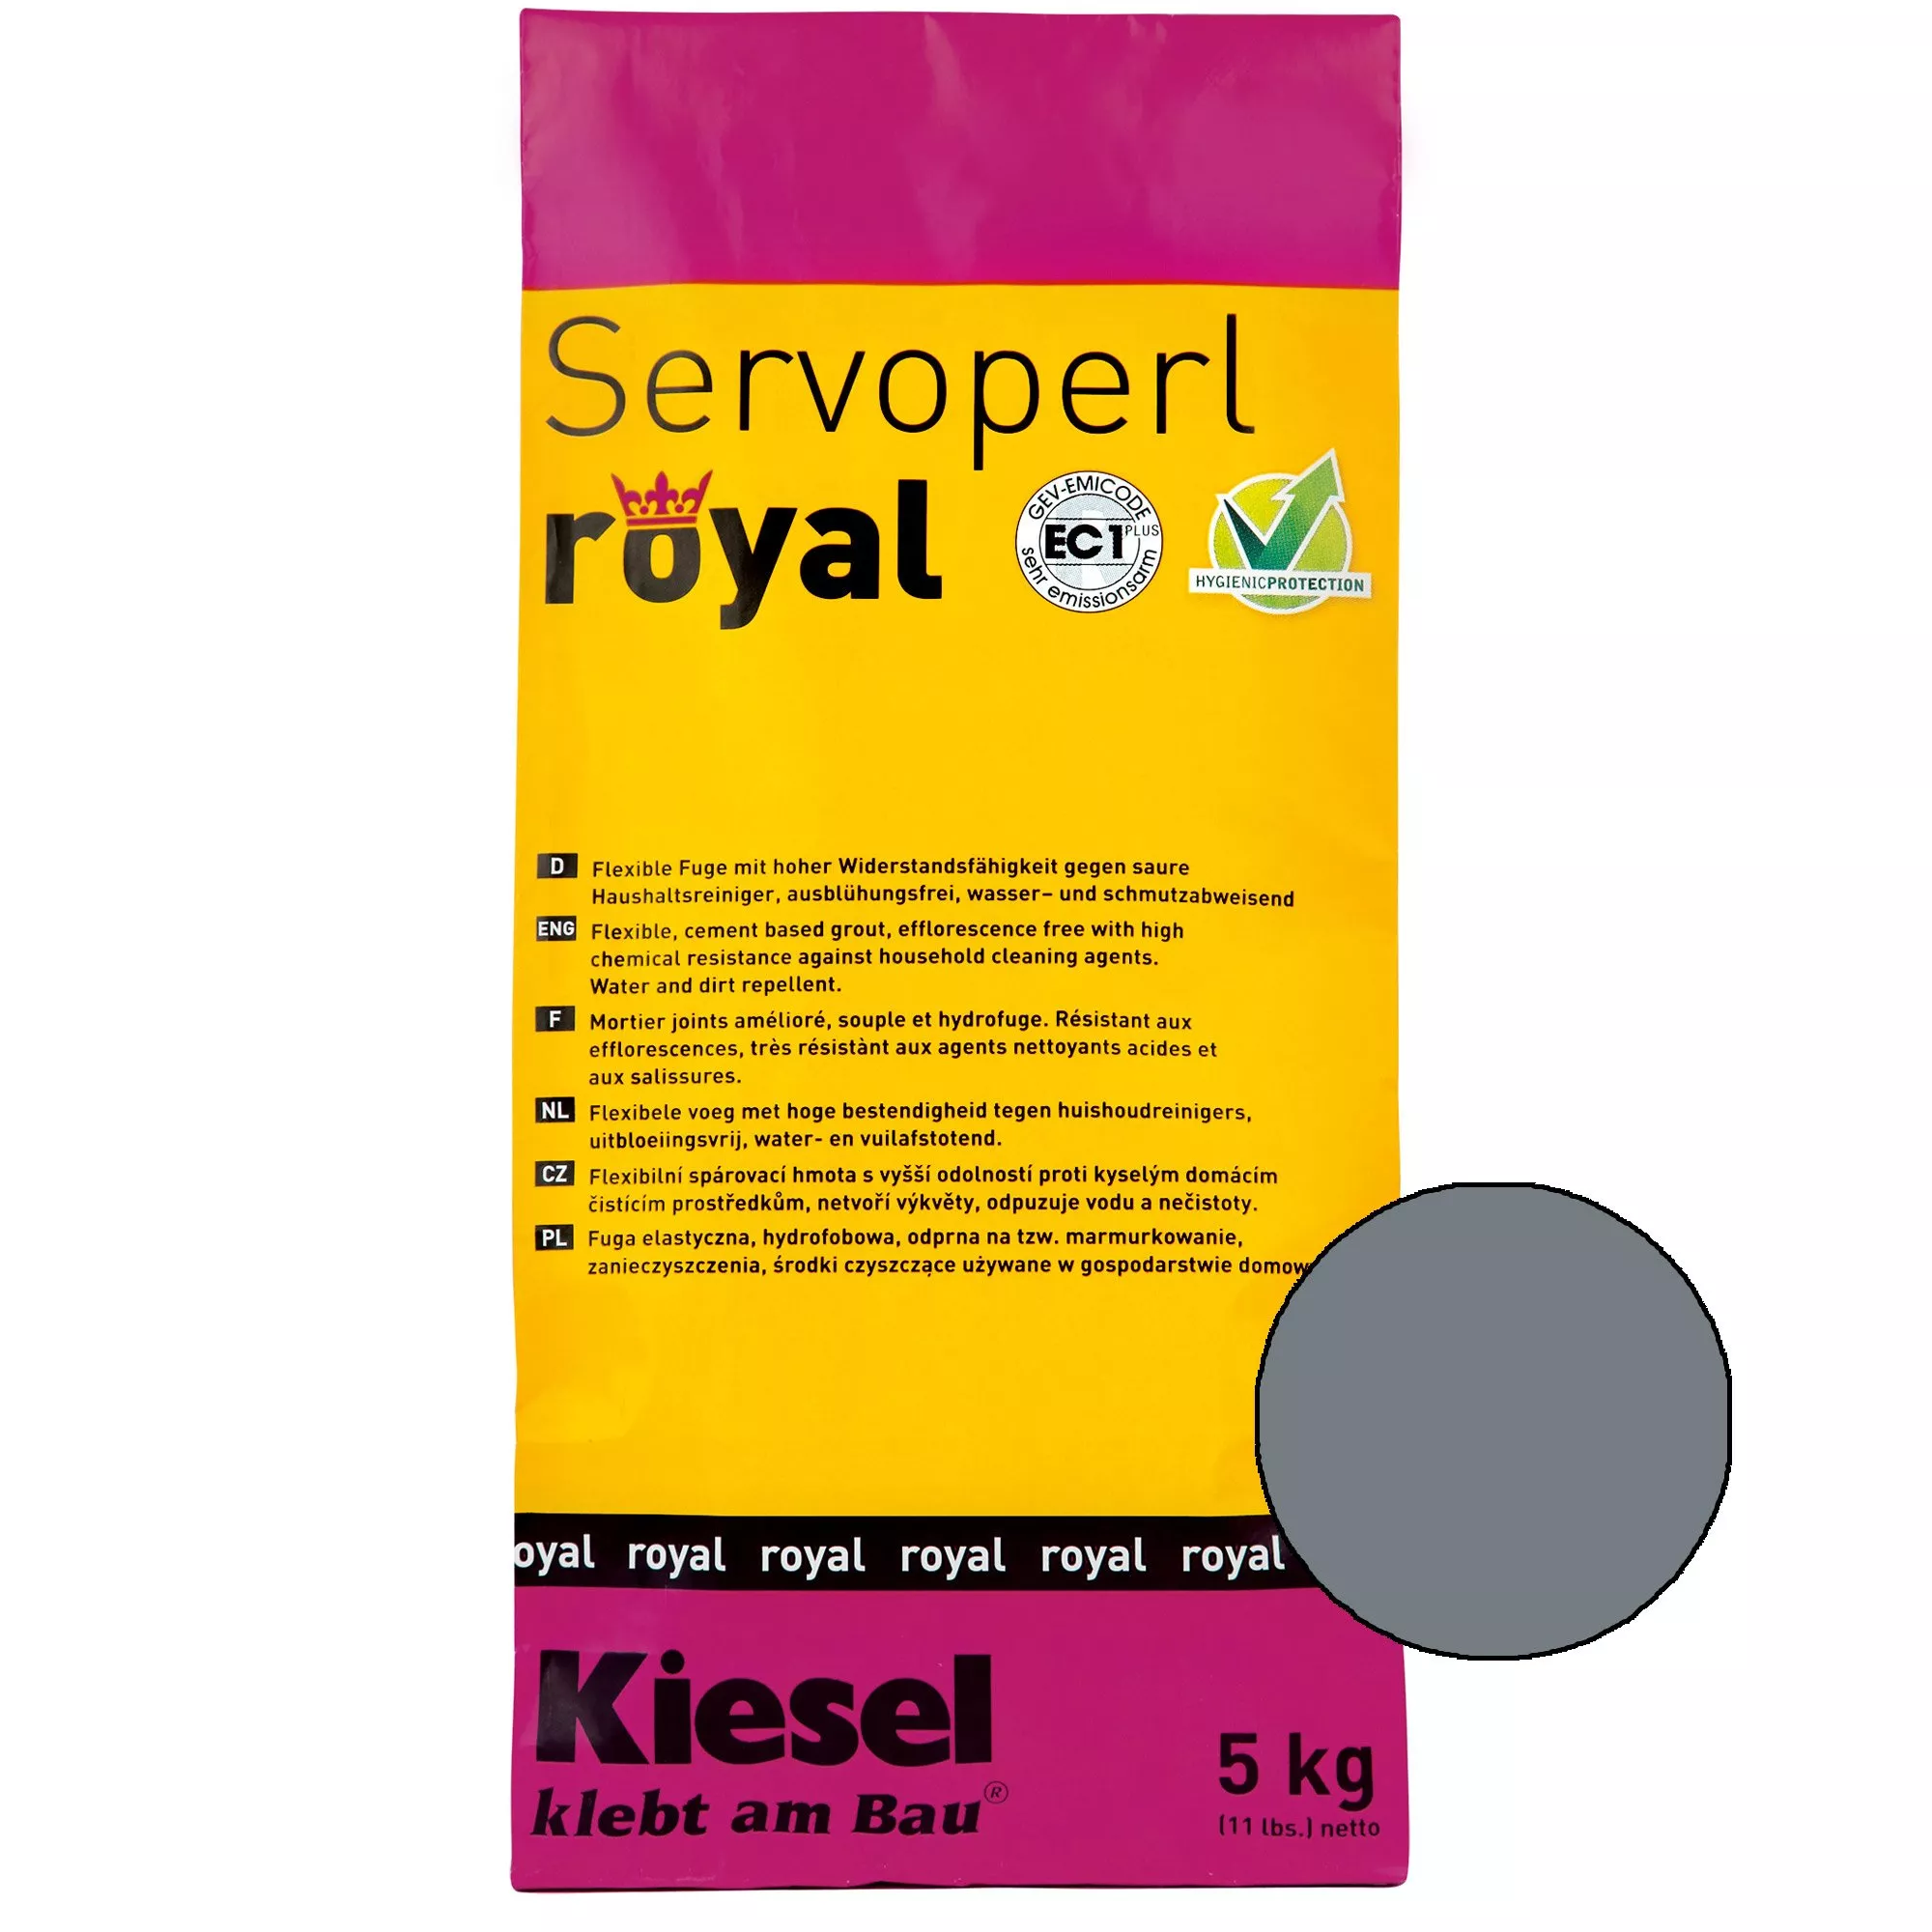 Kiesel Servoperl Royal - Flexibele, Water- En Vuilafstotende Voeg (5KG Basalt)